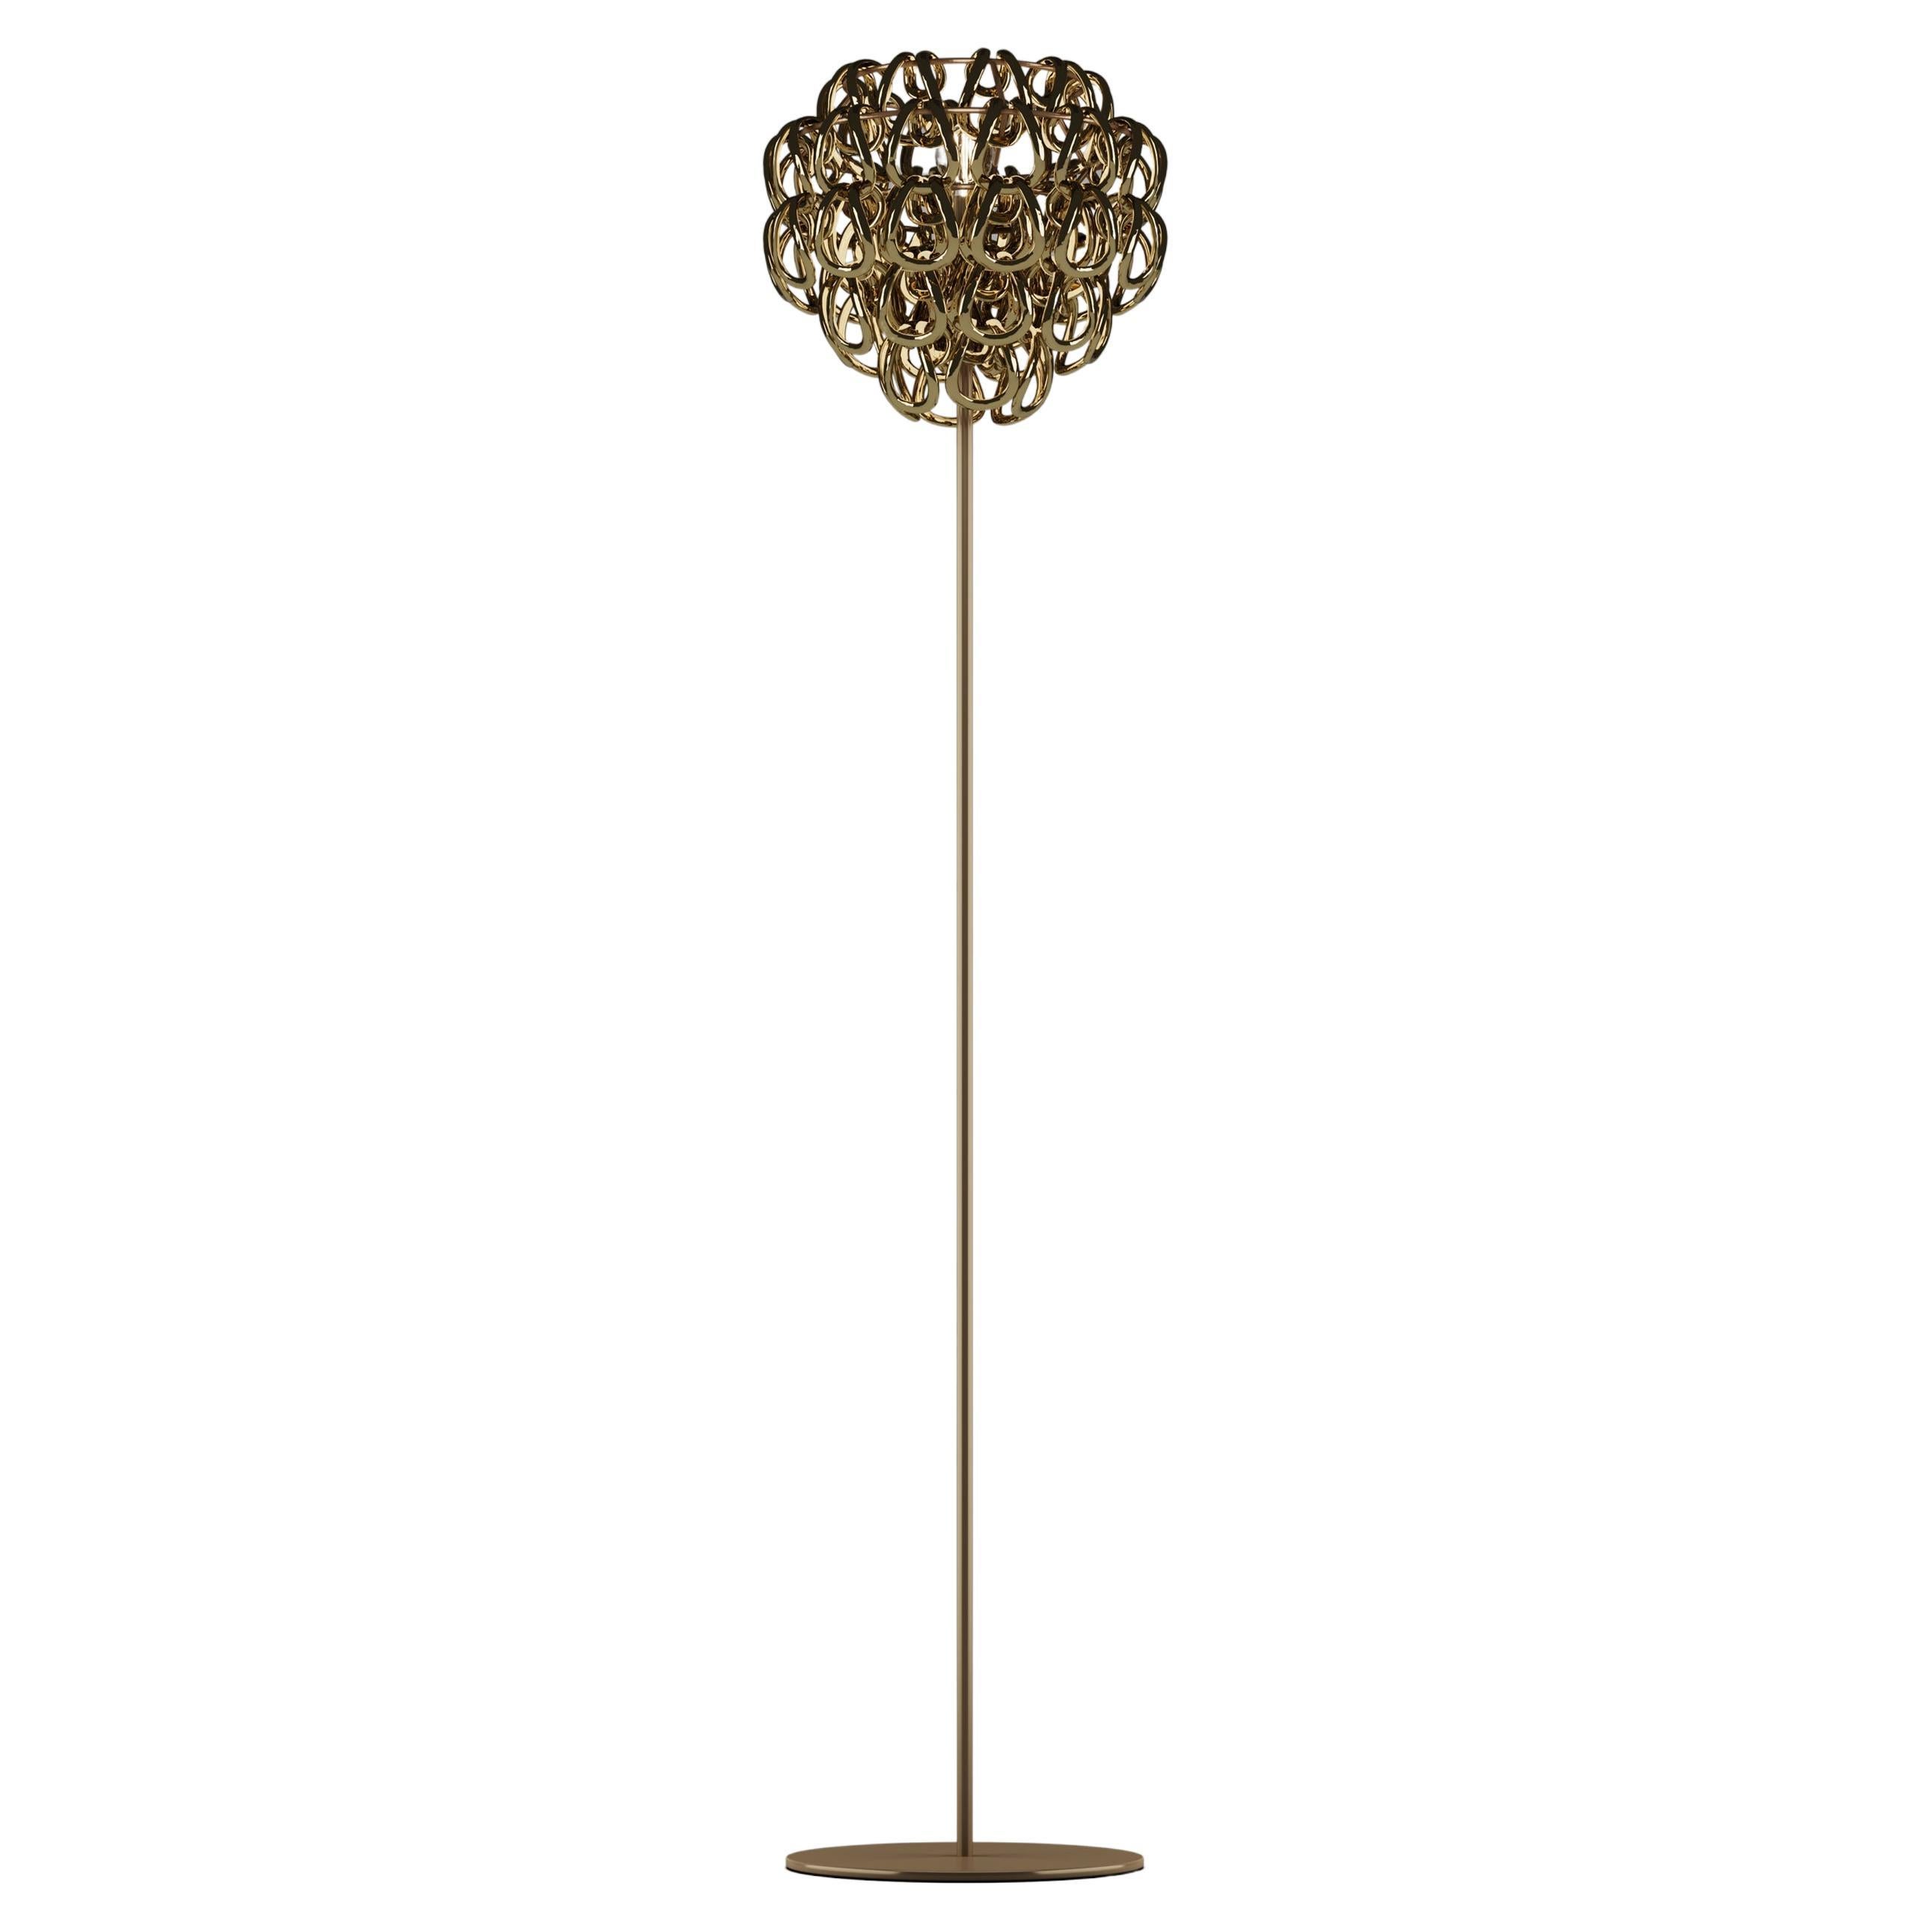 Vistosi Giogali Floor Lamp in Crystal Gold with Matt Bronze Frame